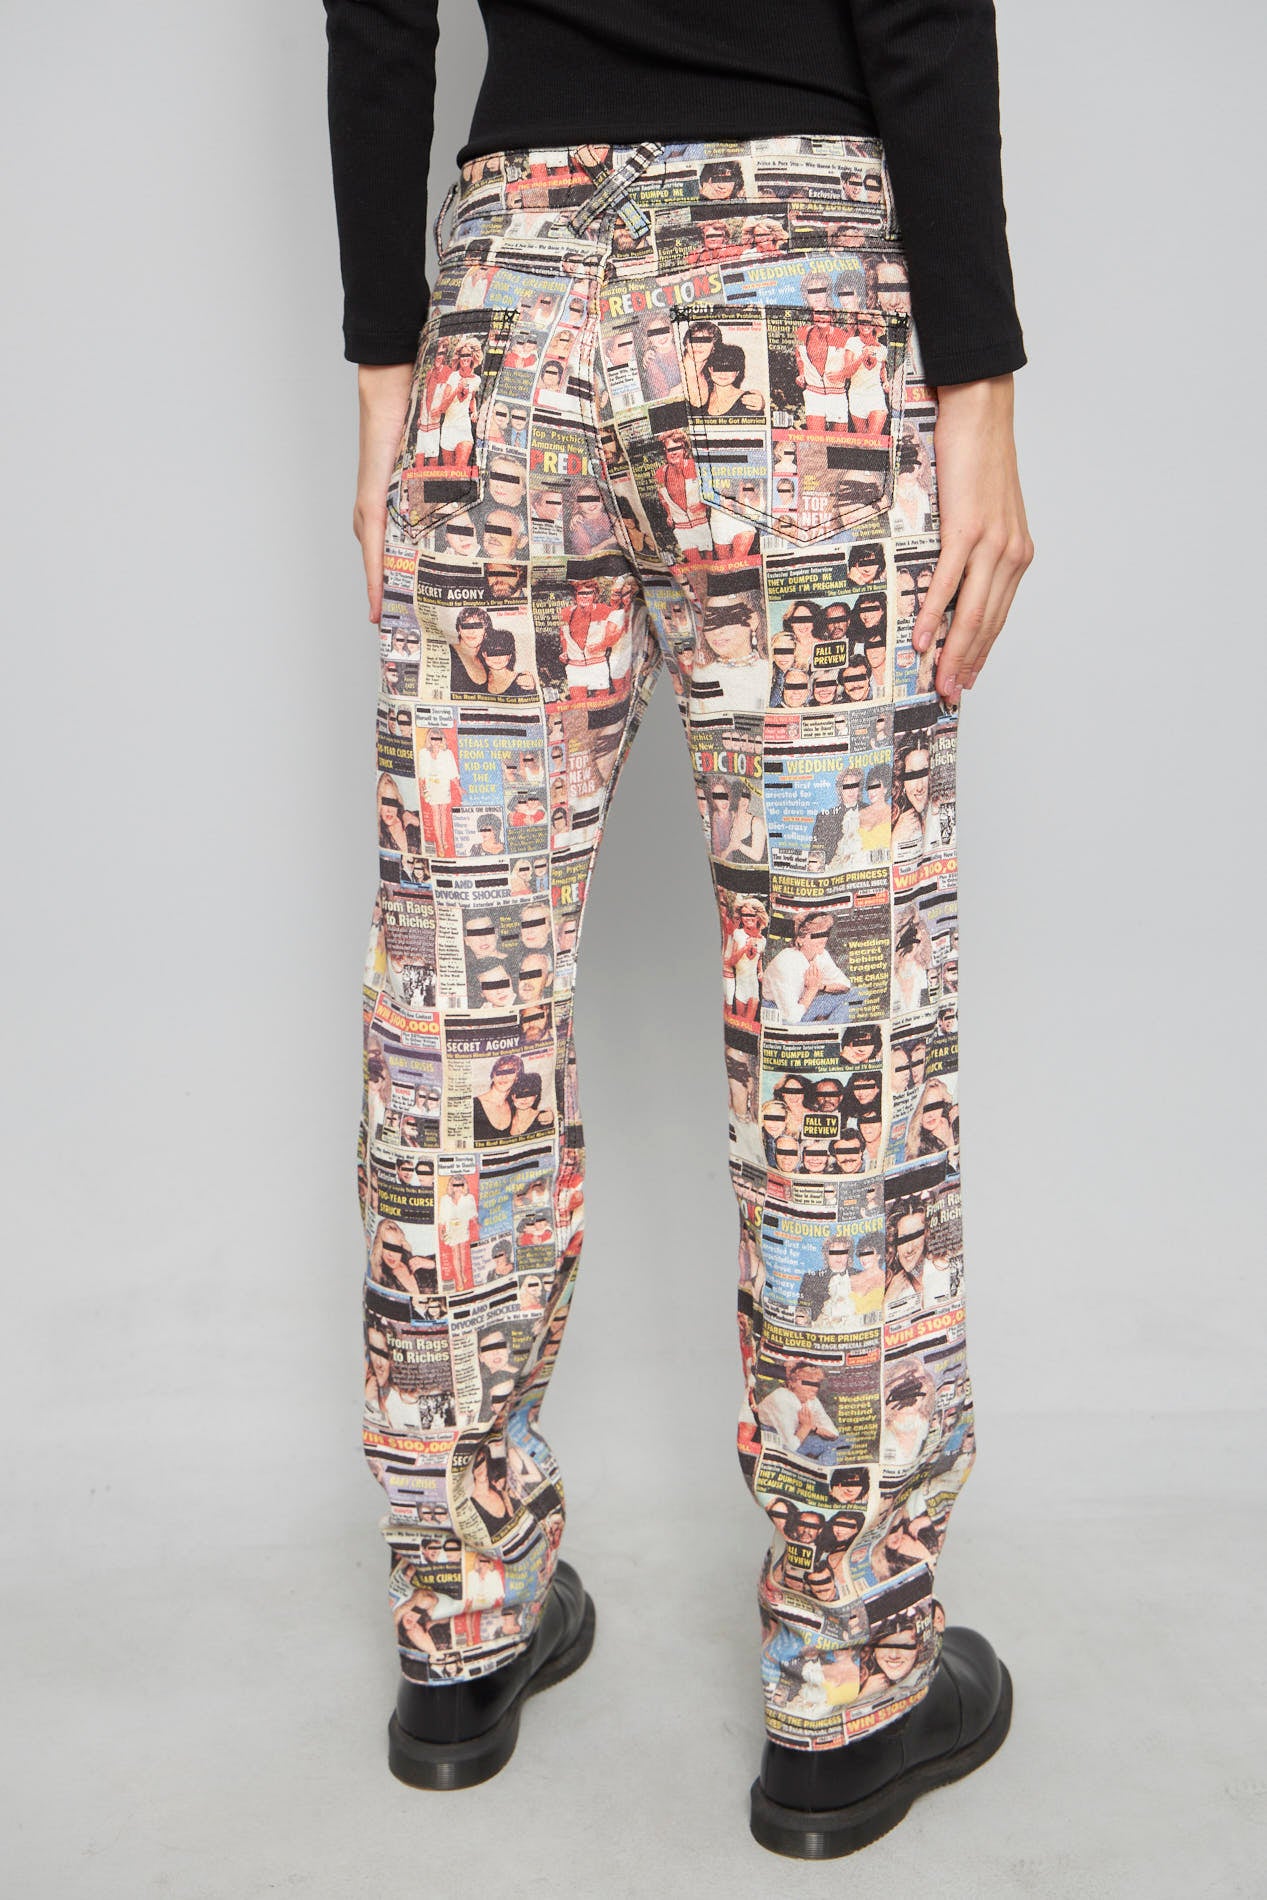 Pantalon casual  multicolor rachel talla S 893